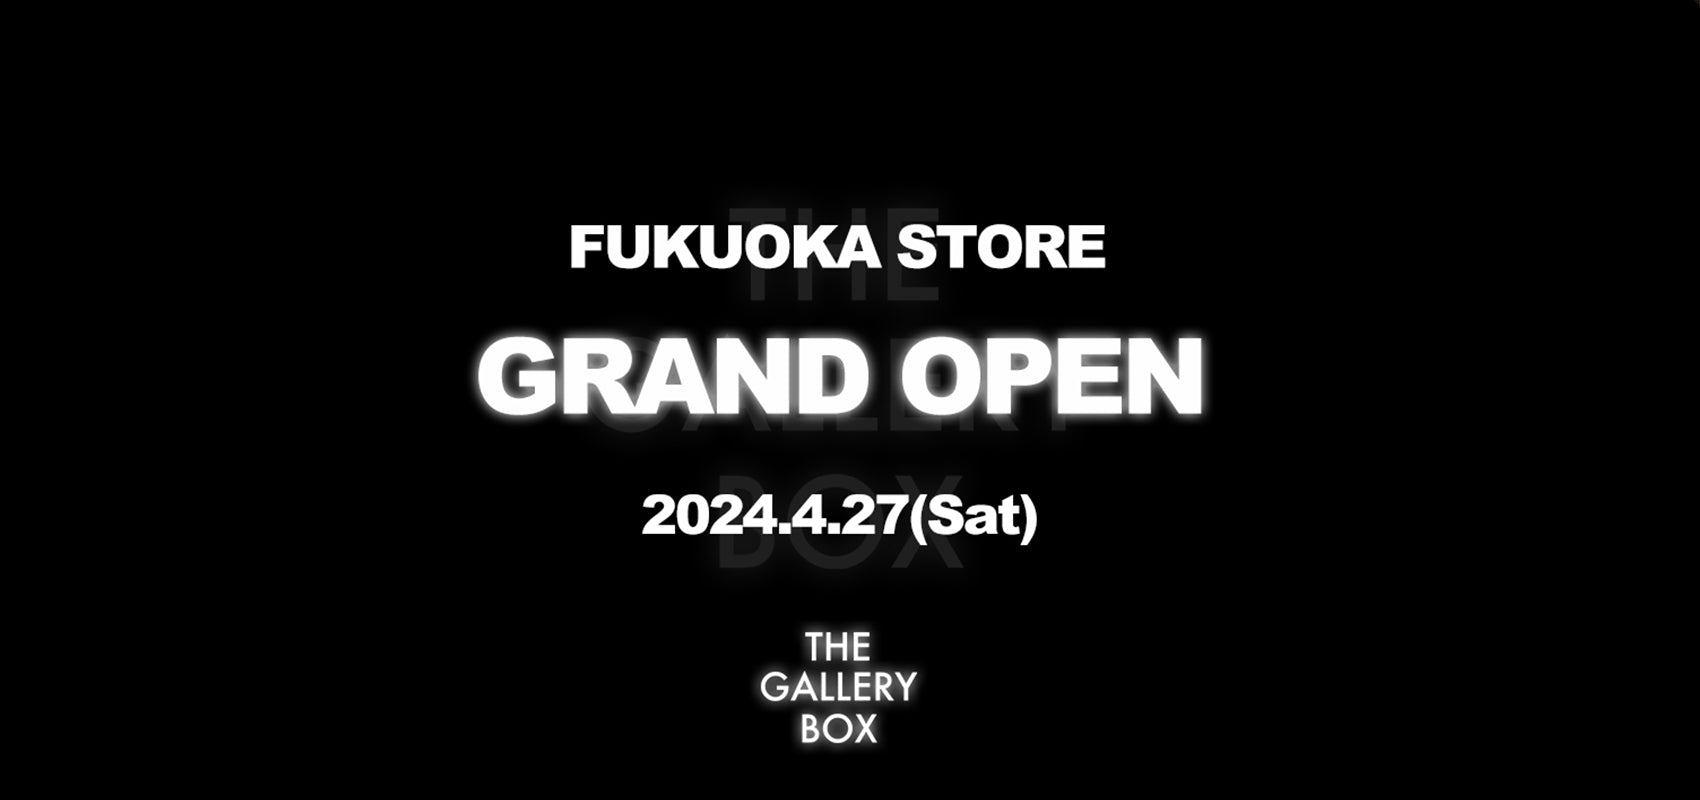 THE GALLERY BOX FUKUOKA GRAND OPEN